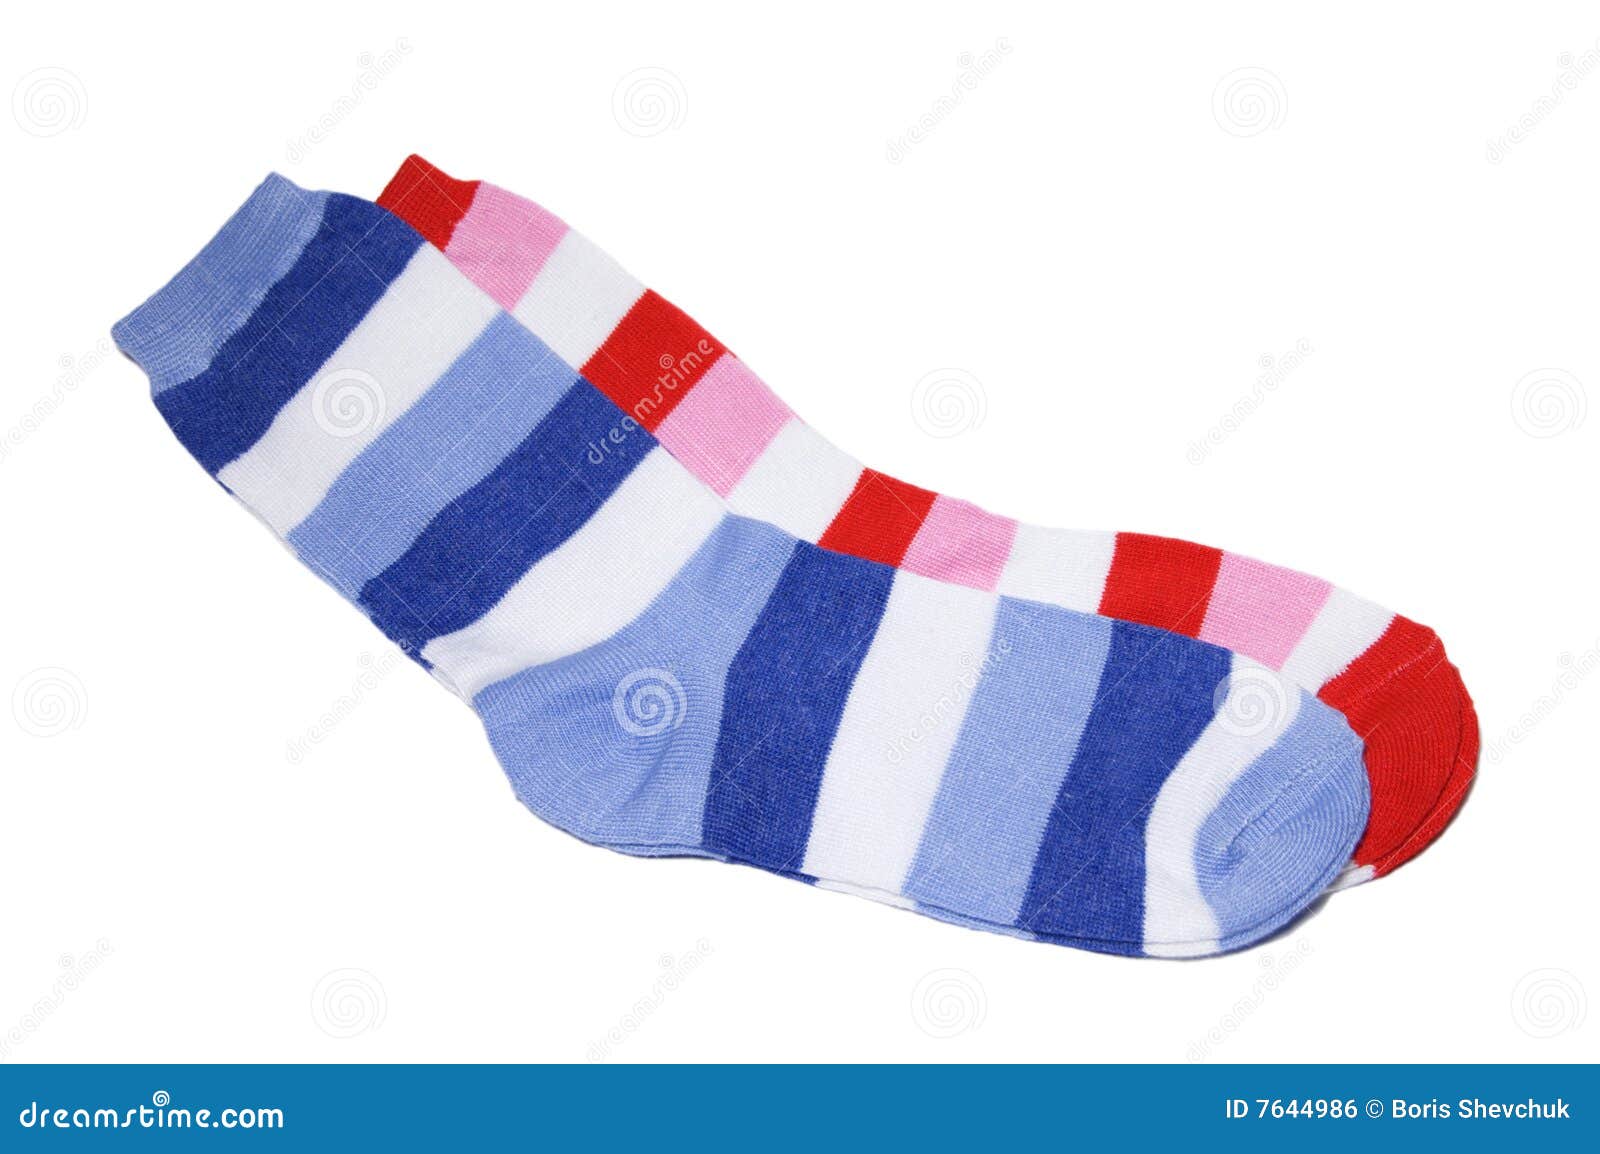 Children s socks stock photo. Image of cotton, heel, blue - 7644986